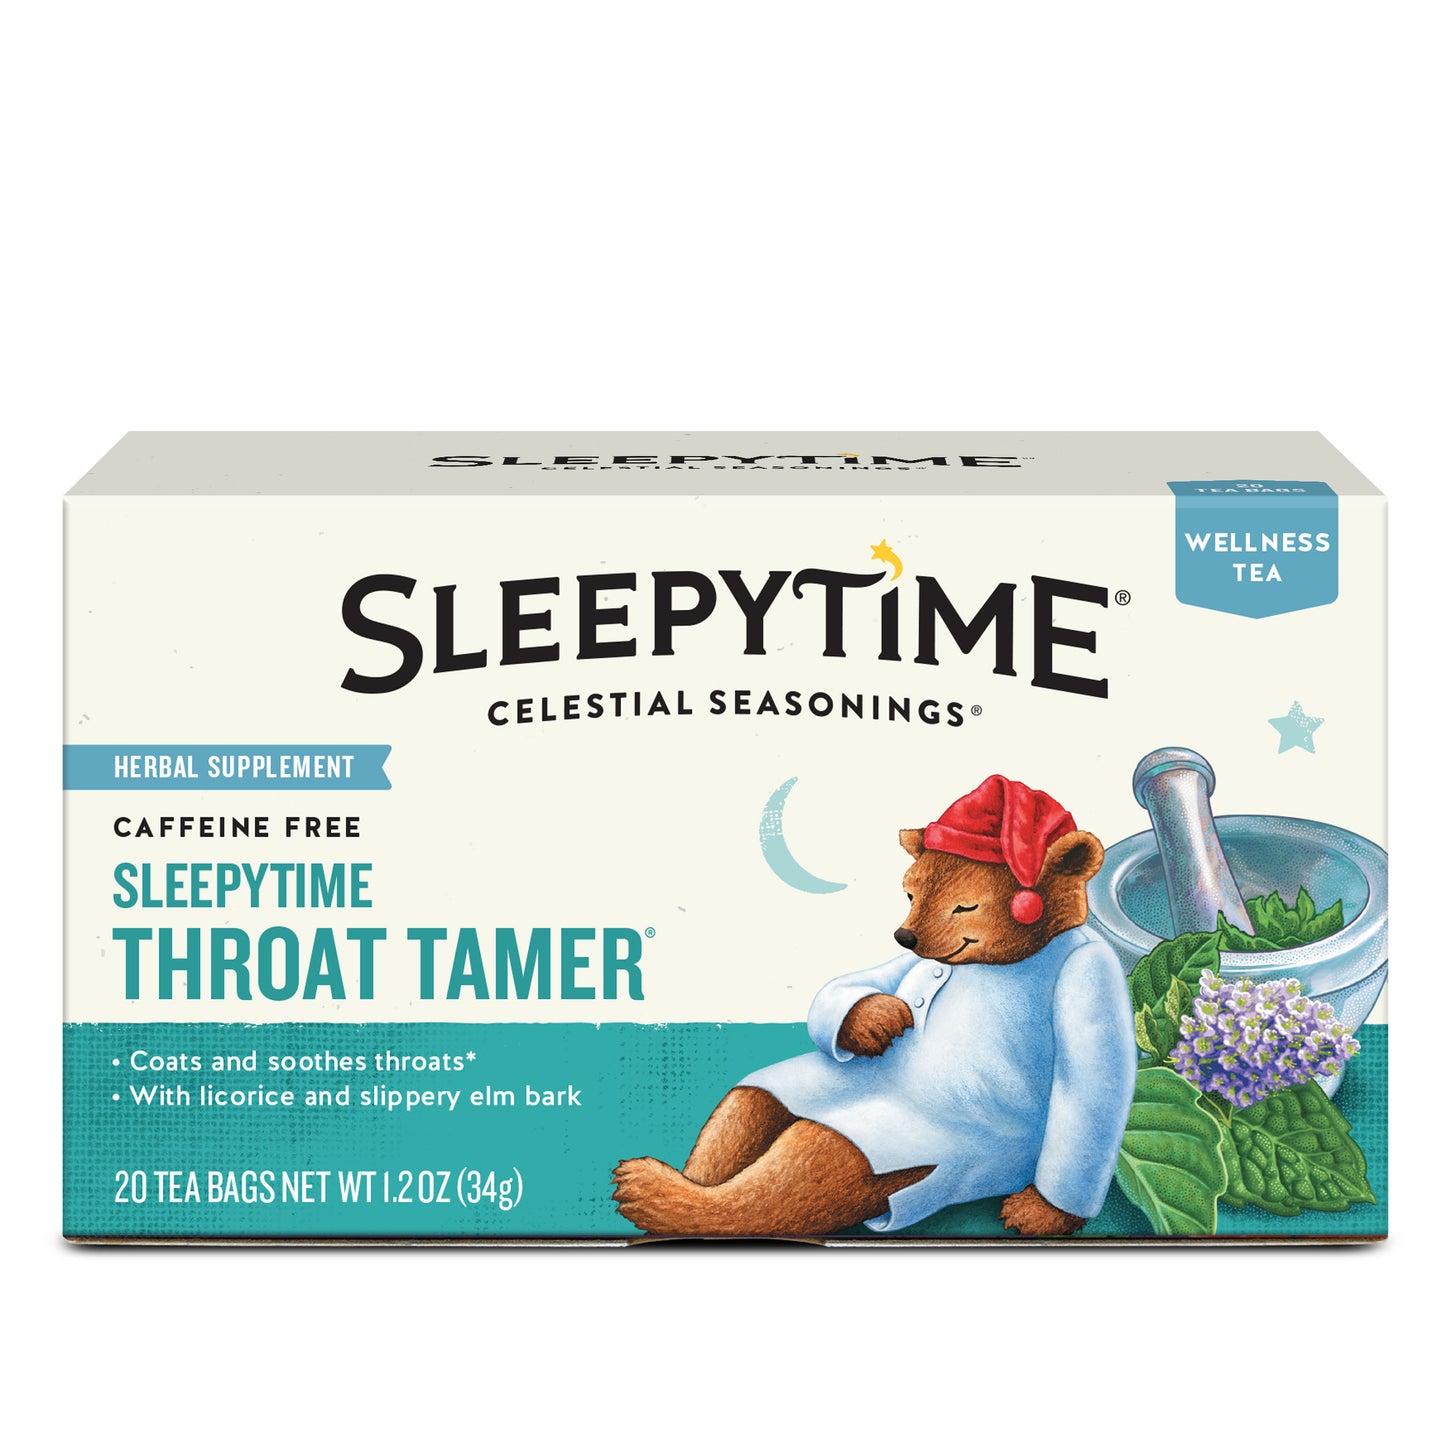 Celestial Seasonings Throat Tamer Sleepytime (Wellness Tea)